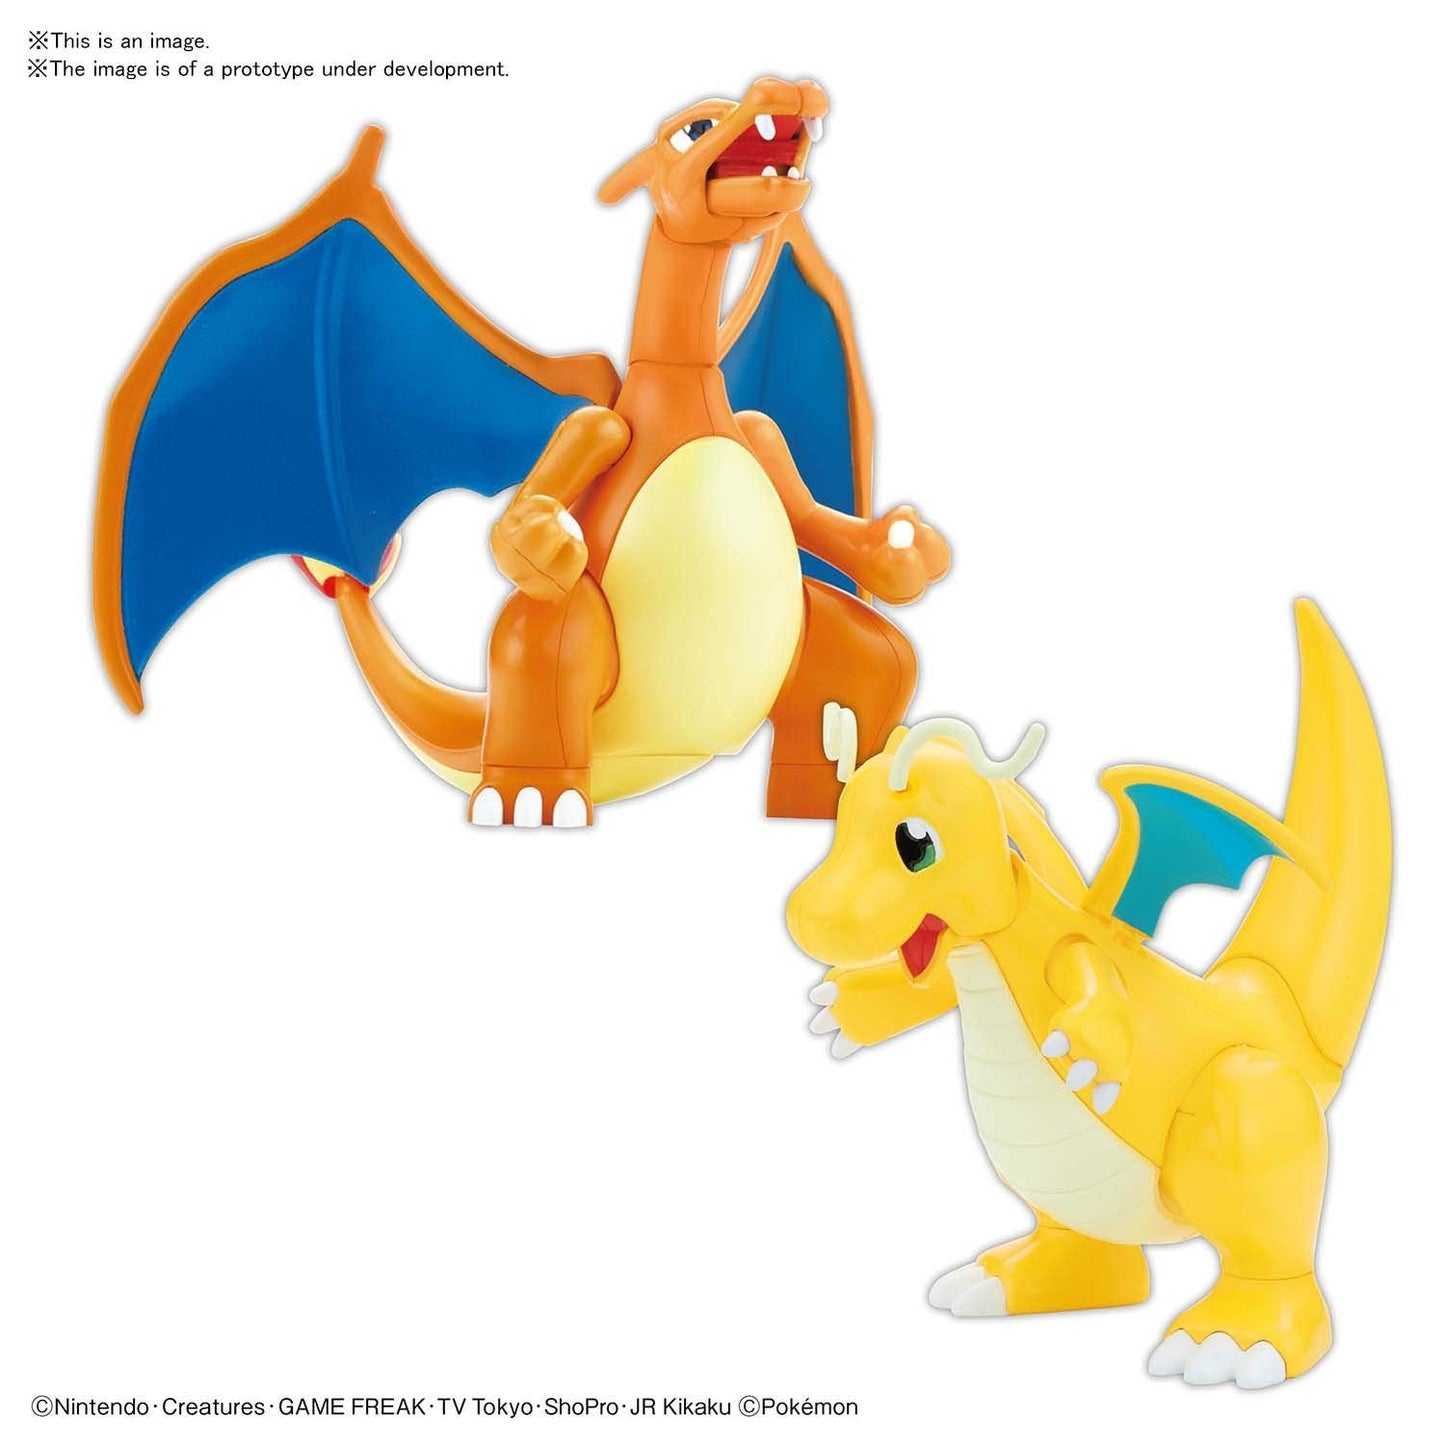 Bandai Charizard & Dragonite 'Pokemon', Bandai Spirits Pokemon Model Kit